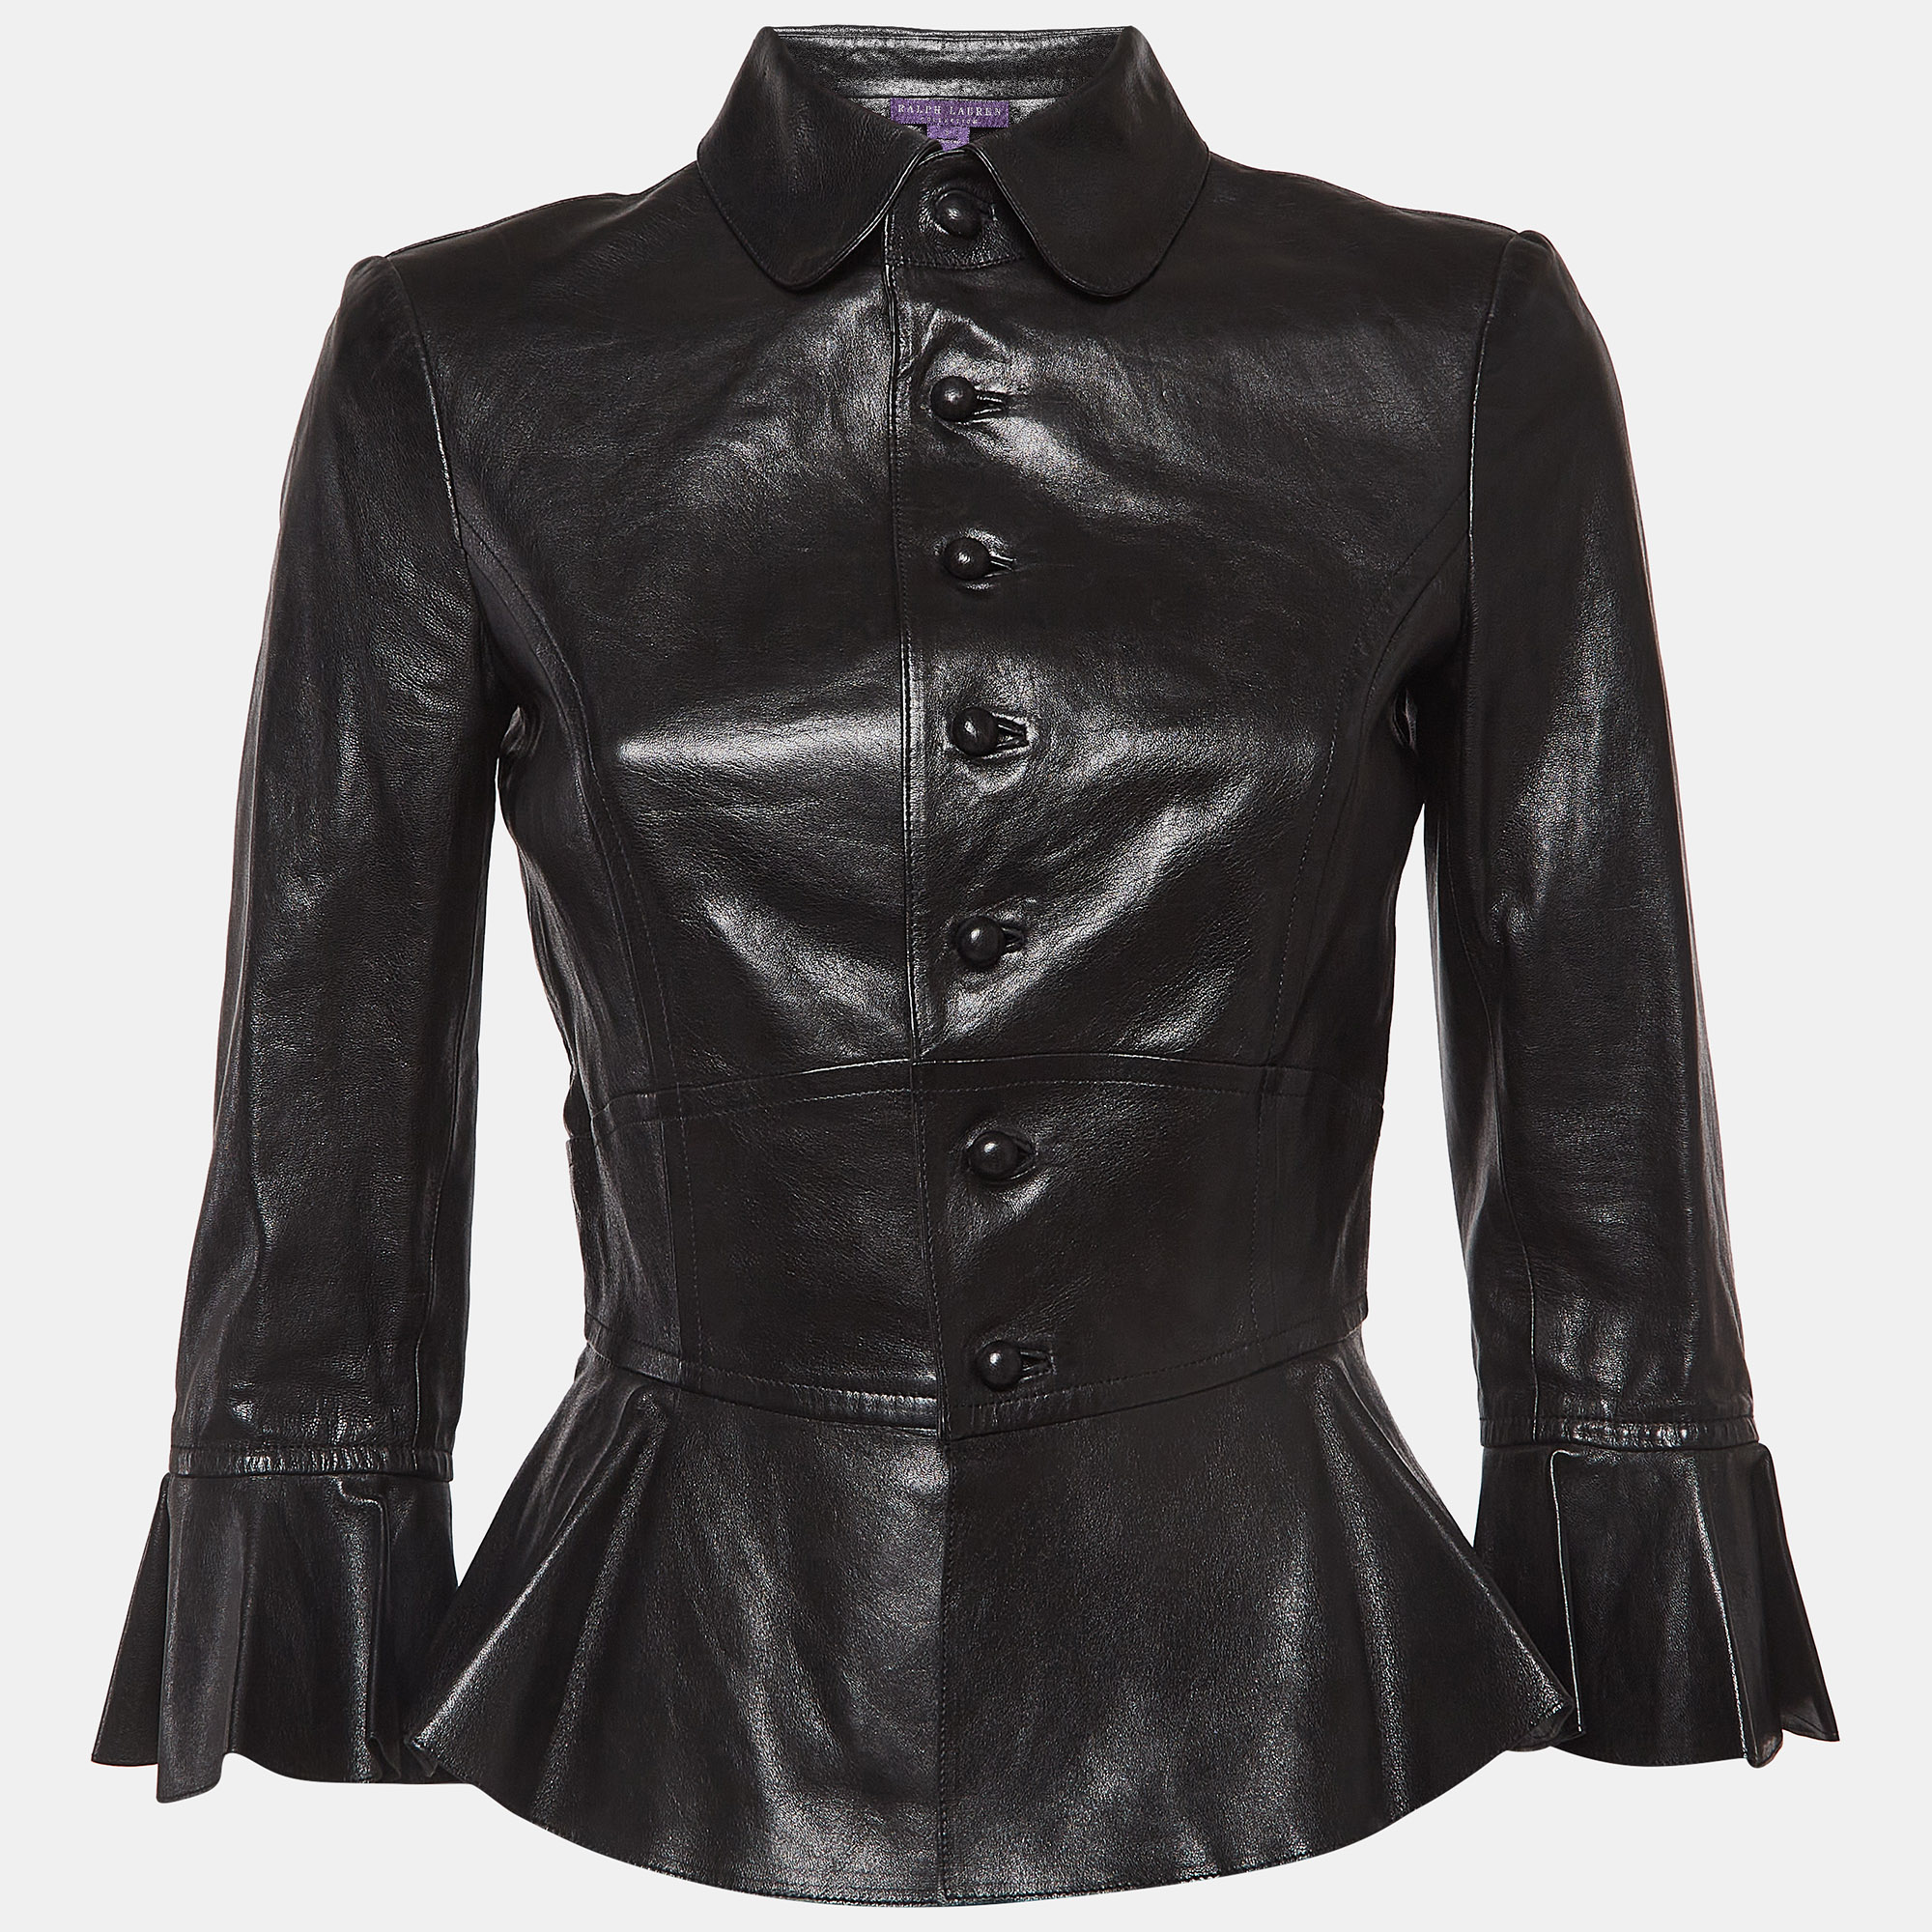 Ralph lauren collection black leather peplum style jacket m